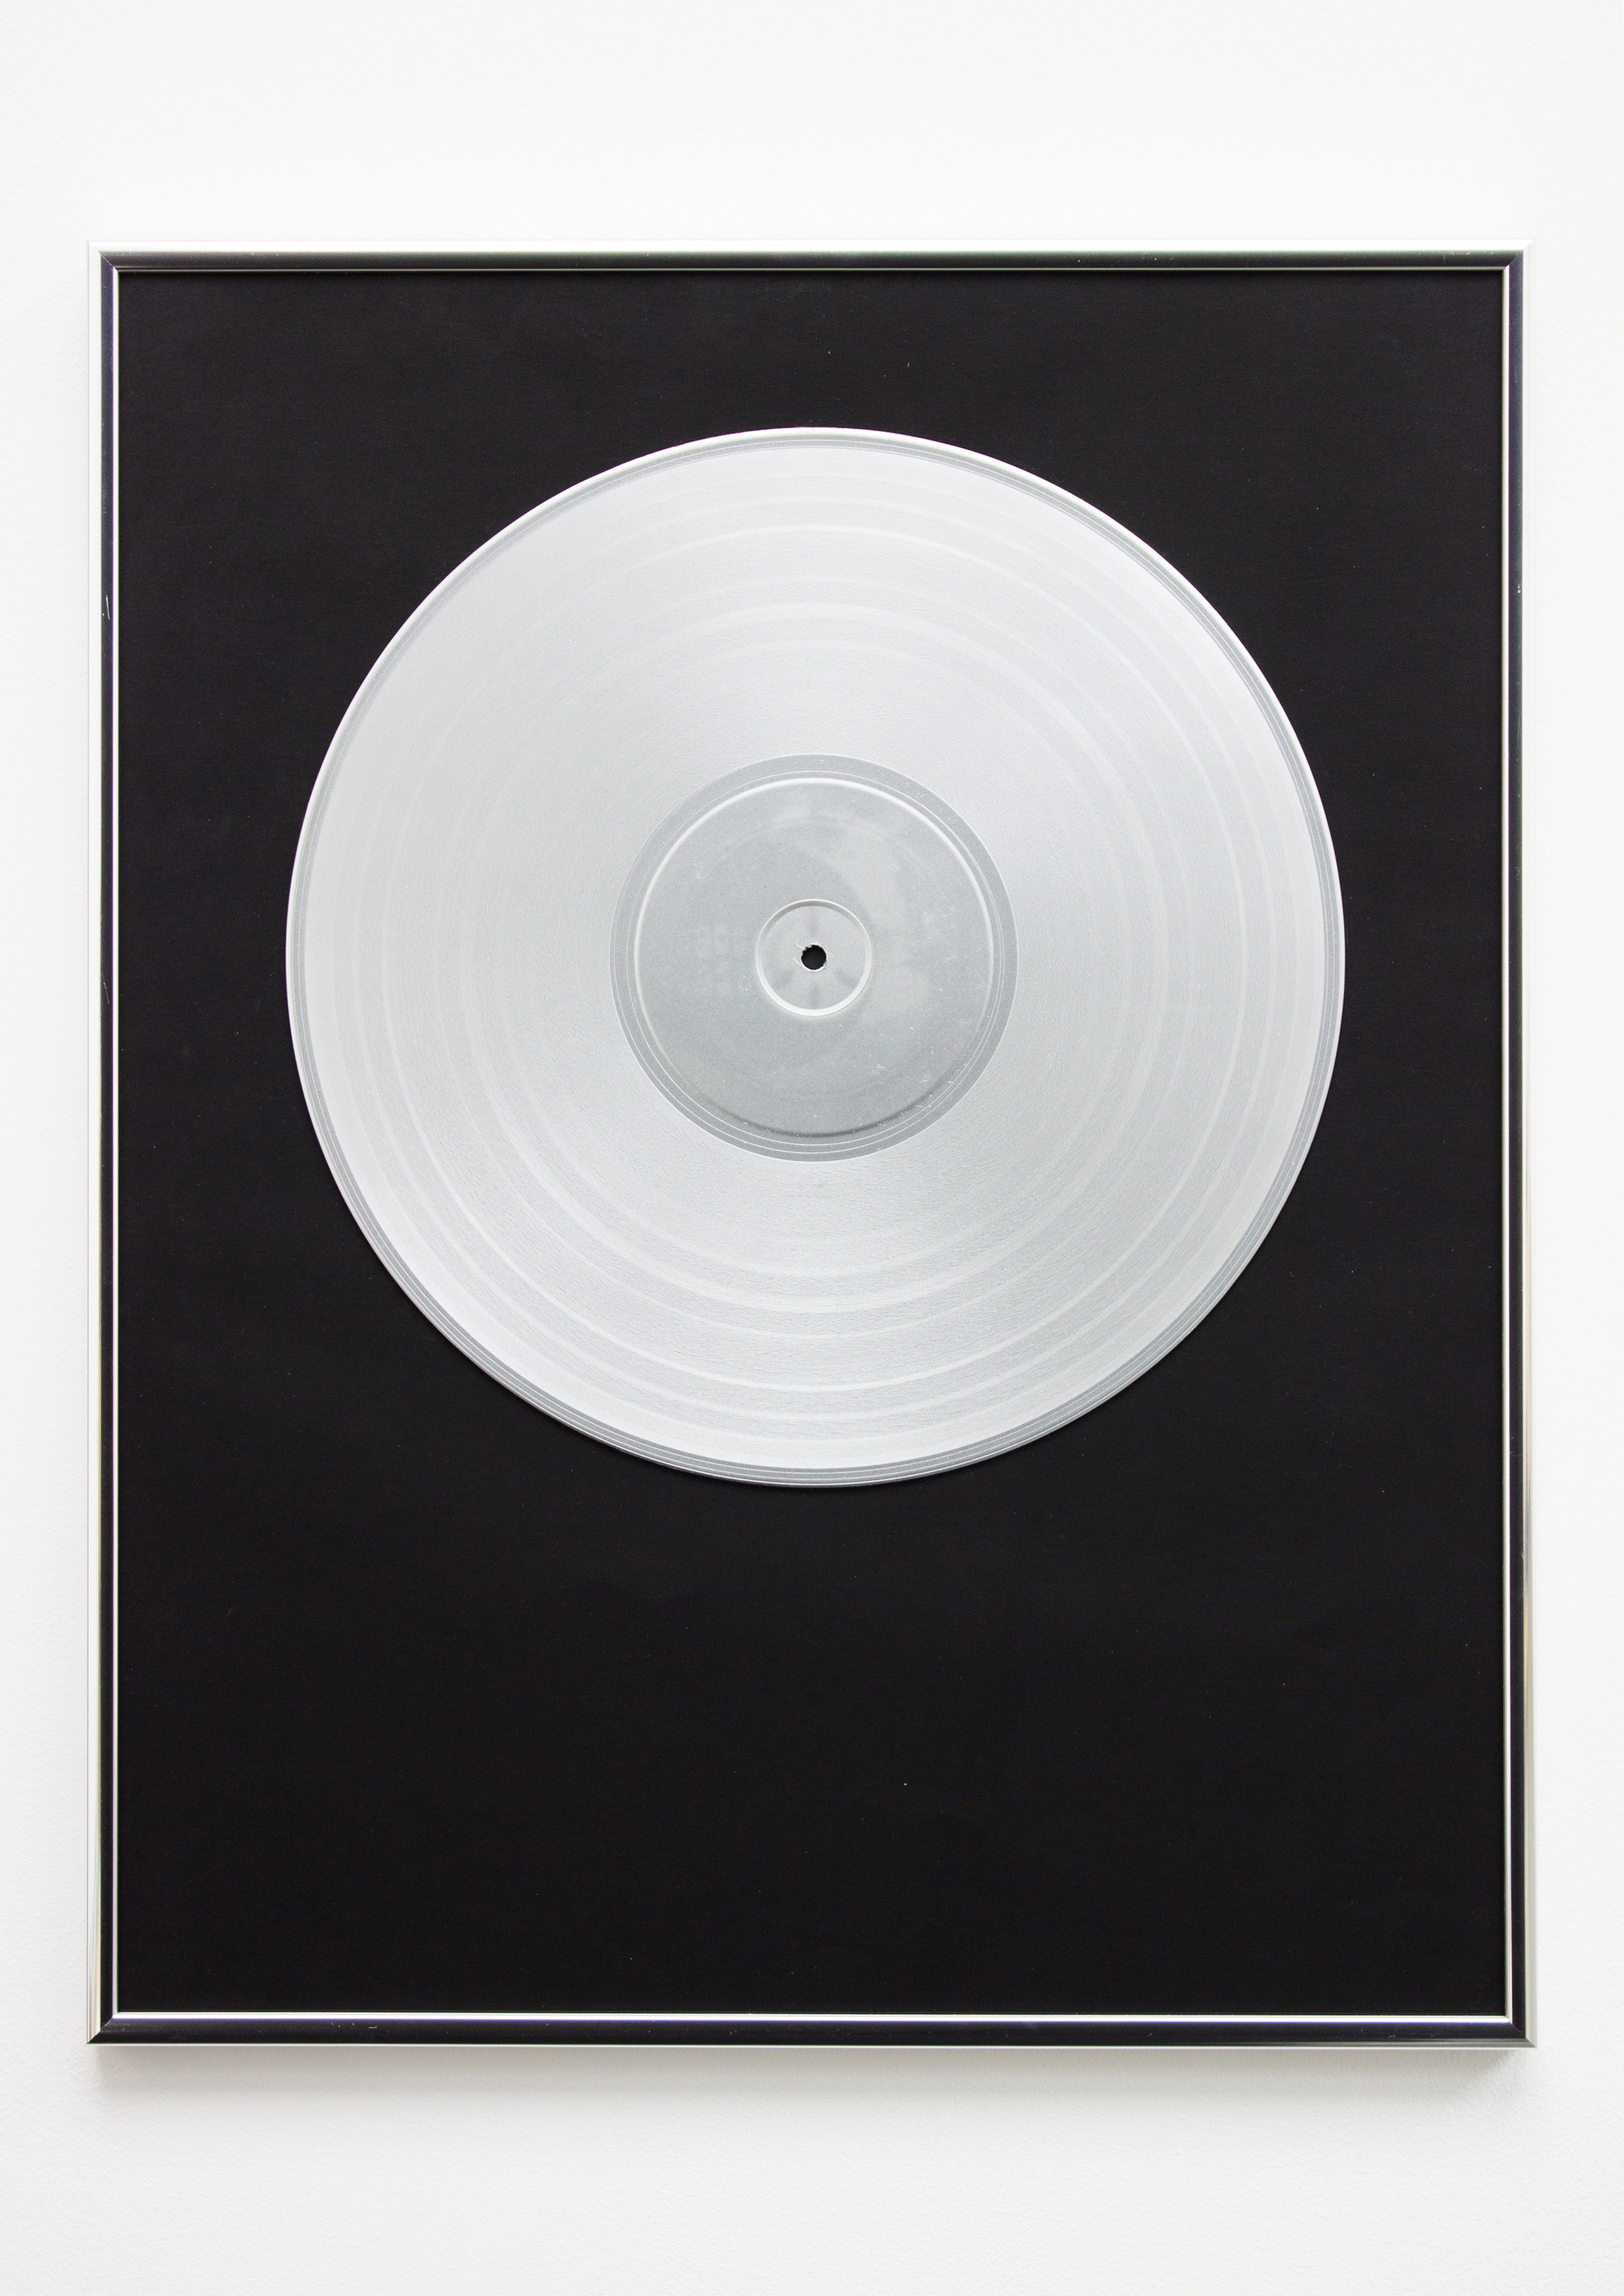  12"14. Vinyl record, spray paint, paper &amp; silver frame, 51cm x 41cm x 2cm, 2019. ©Neil Kilby. 